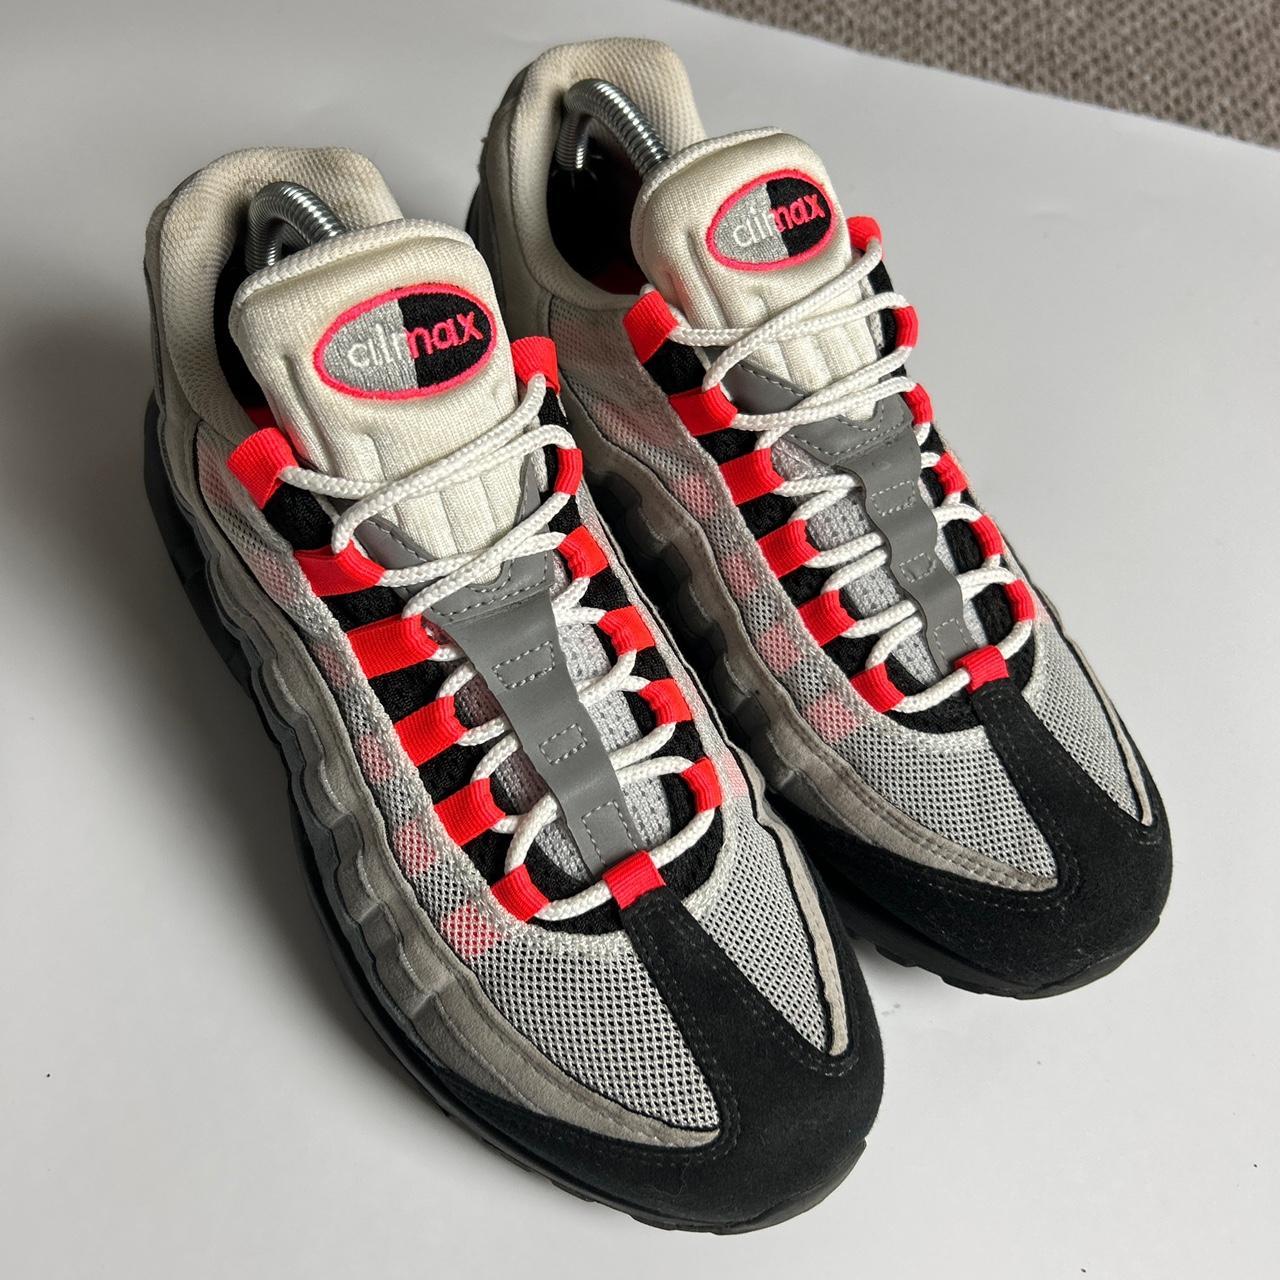 Nike Solar Red 95s (UK 7.5)